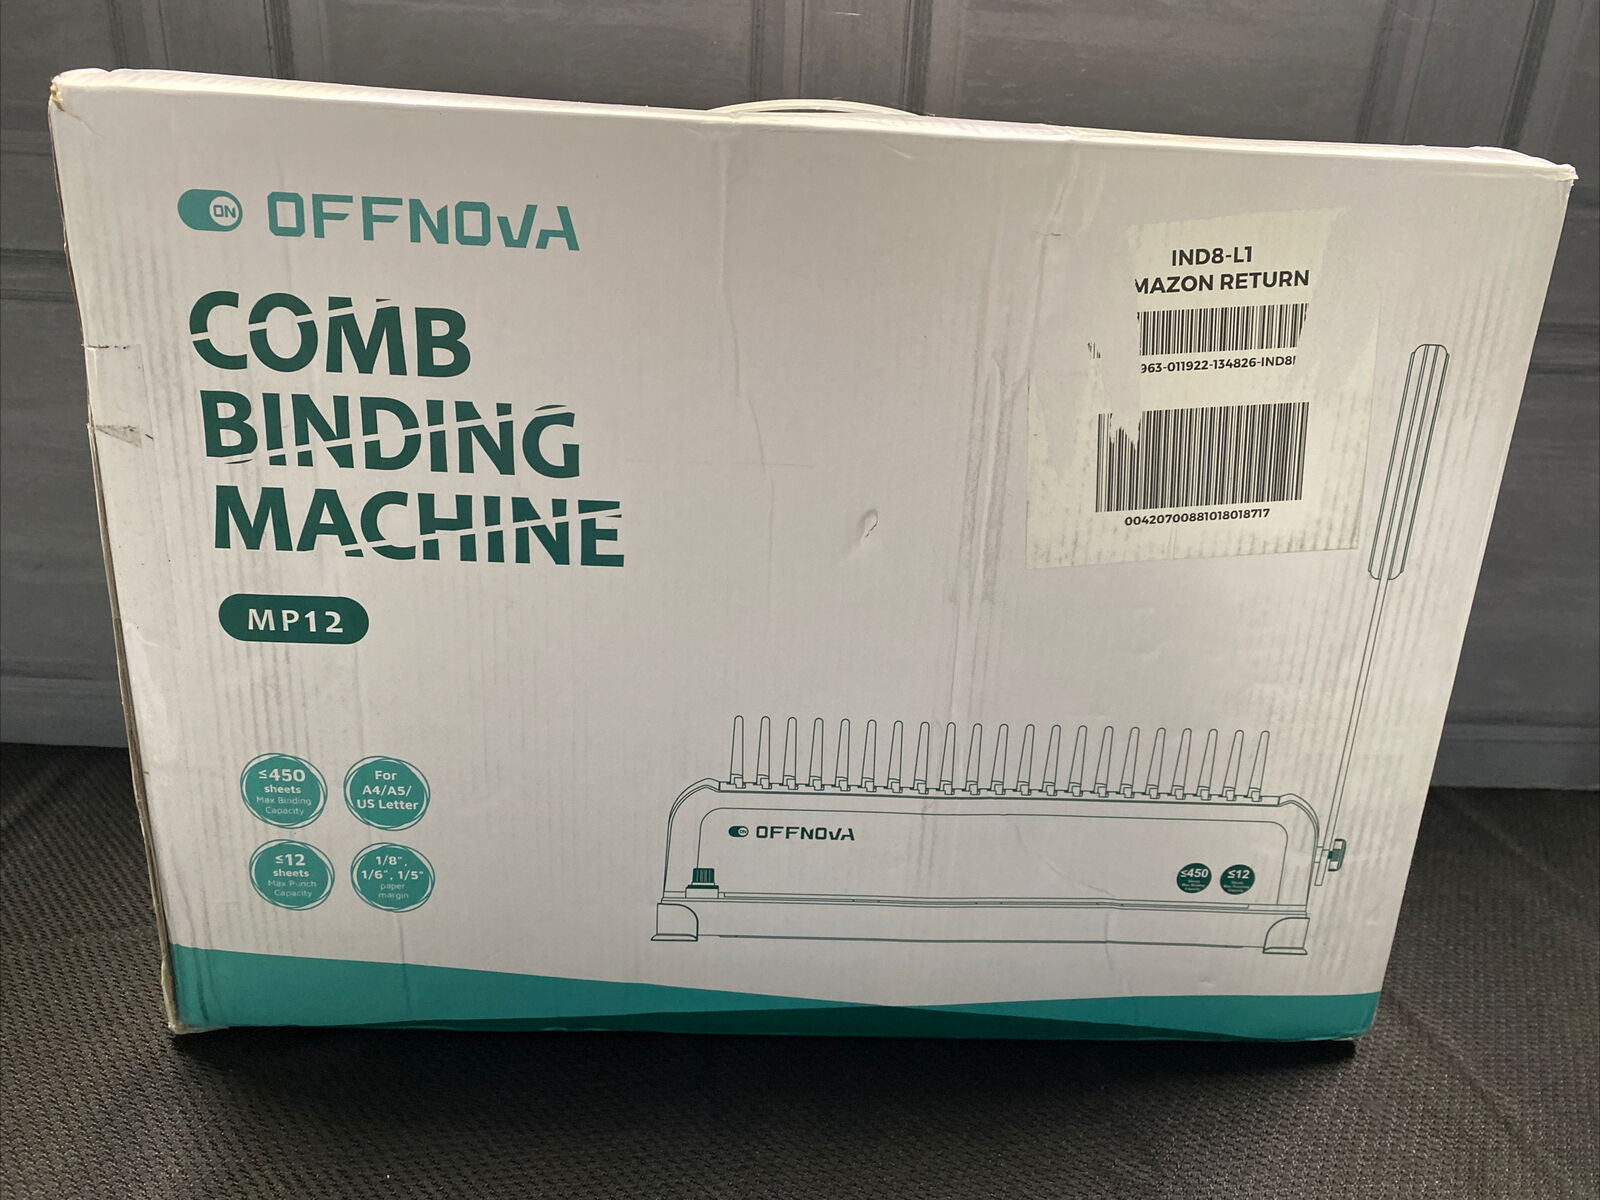 Offnova Comb Binding Machine Mp12 12 Sheets